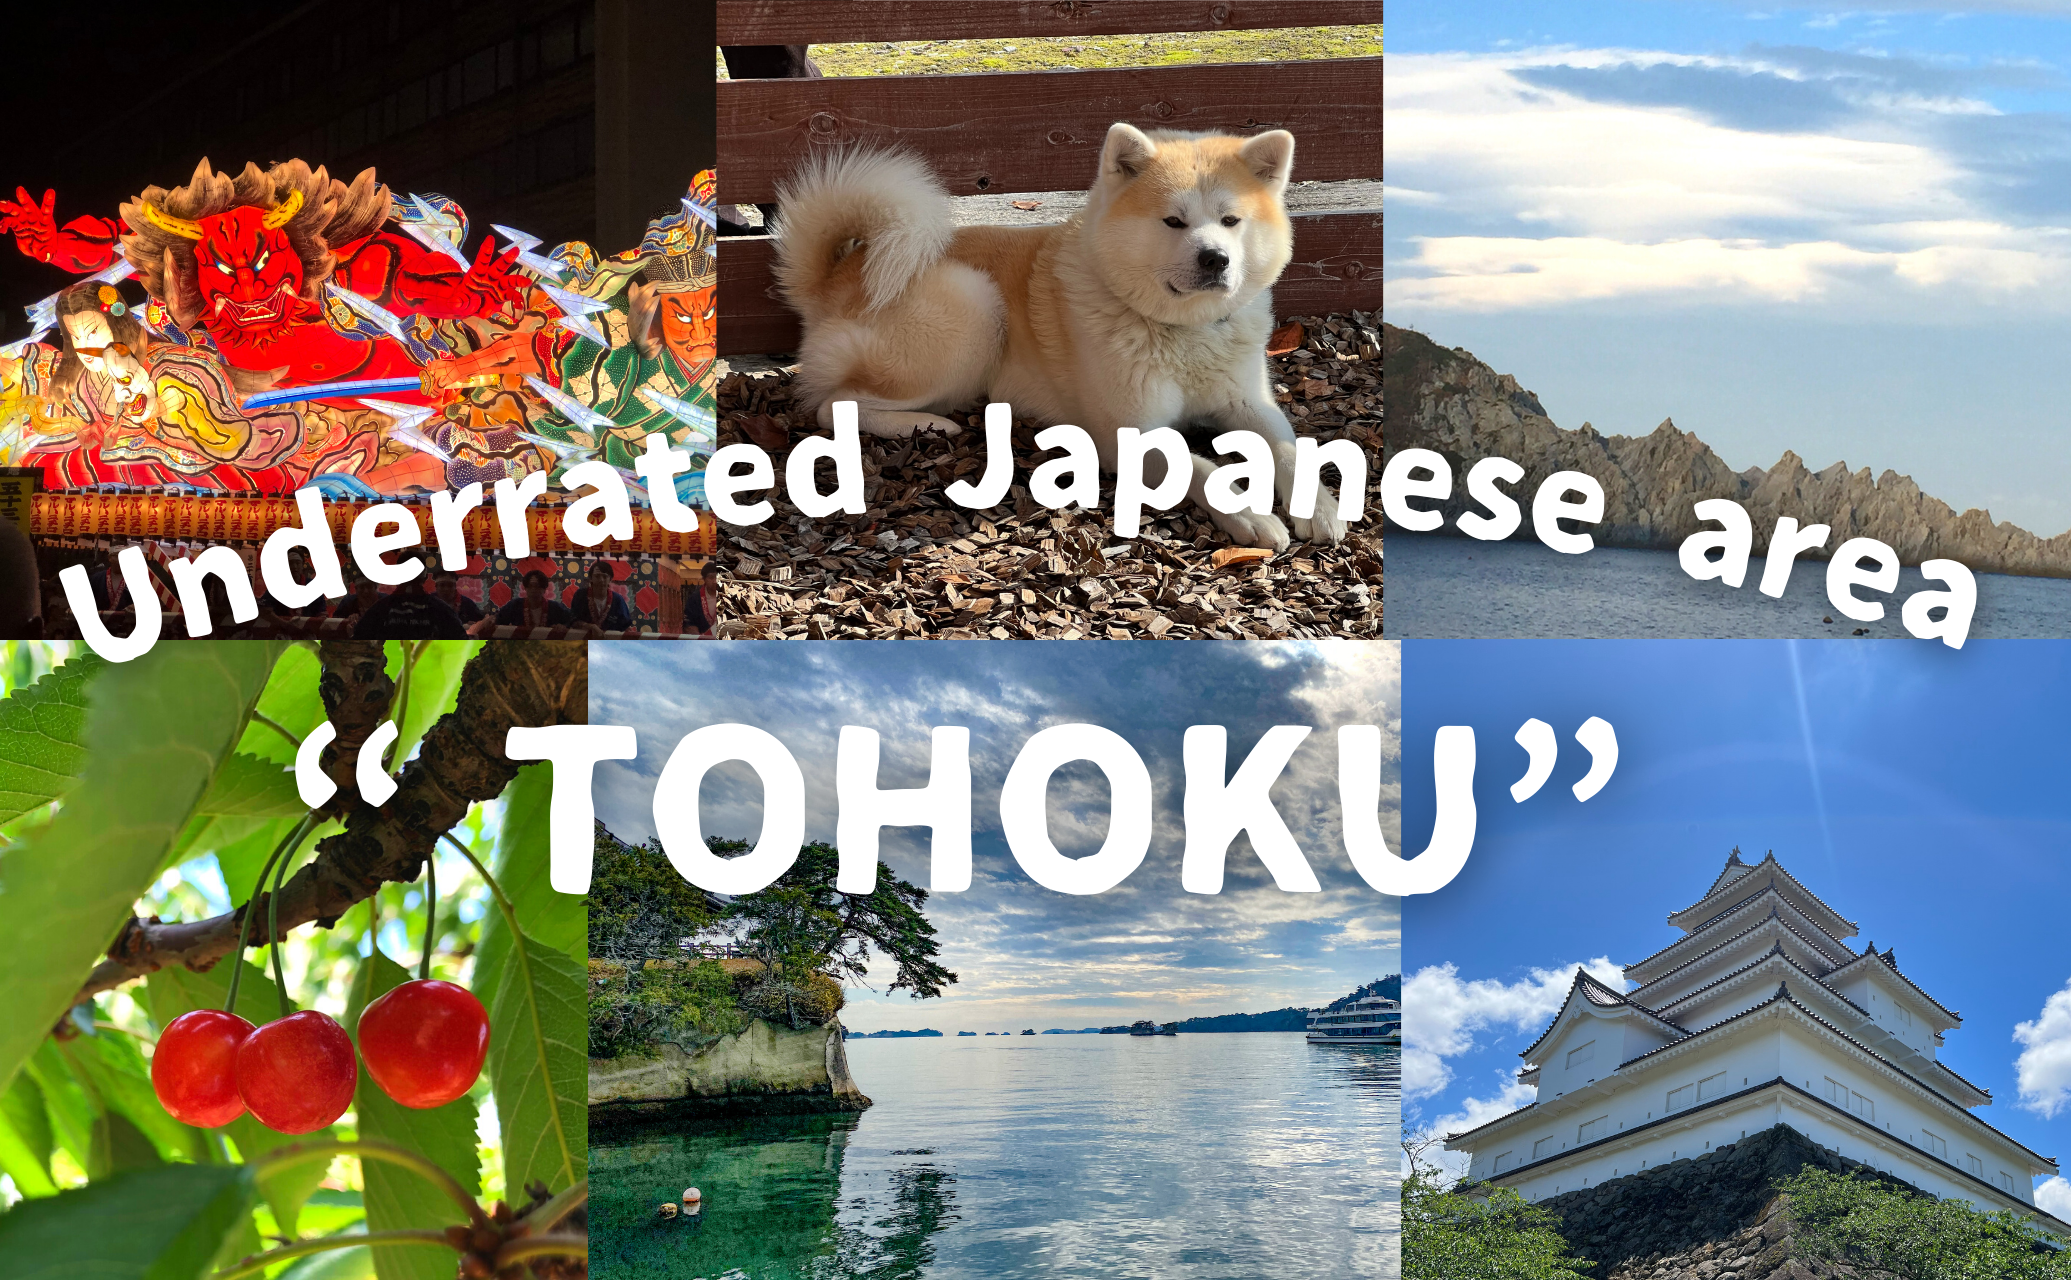 underrated japanese area Tohoku